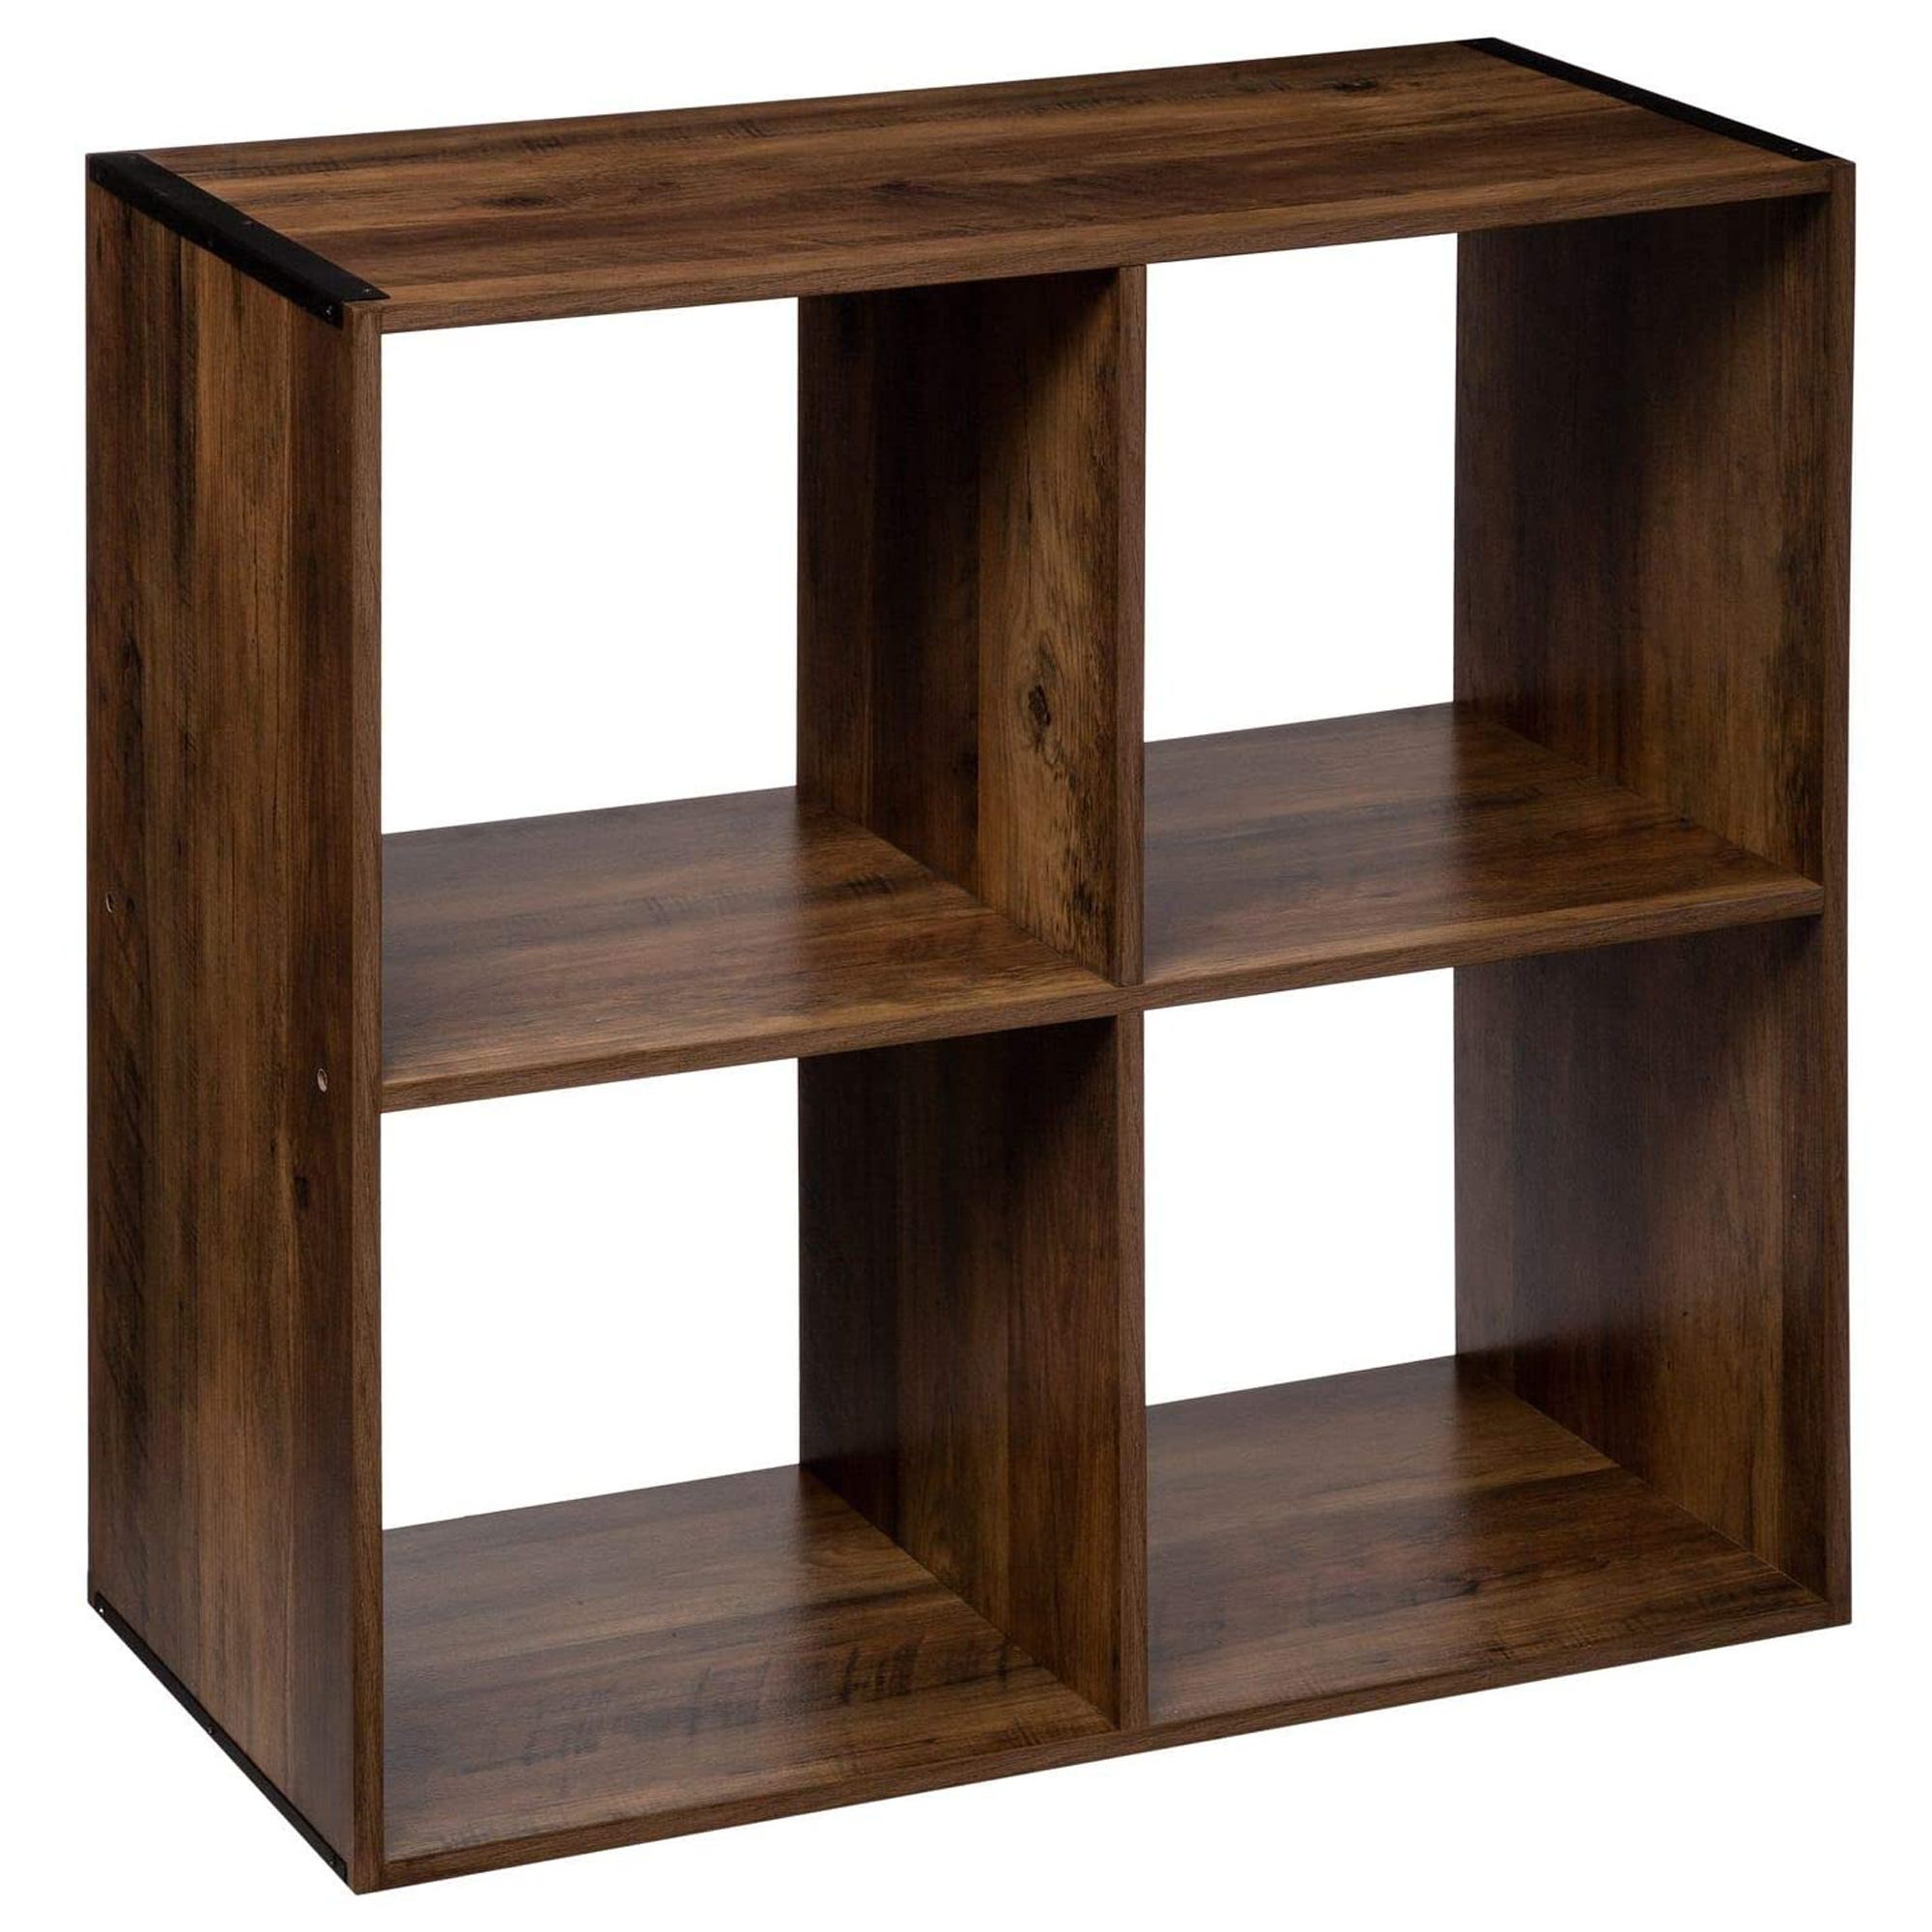 Scaffale in legno stile industrial quattro cubi 67,5x32x h67,5 cm